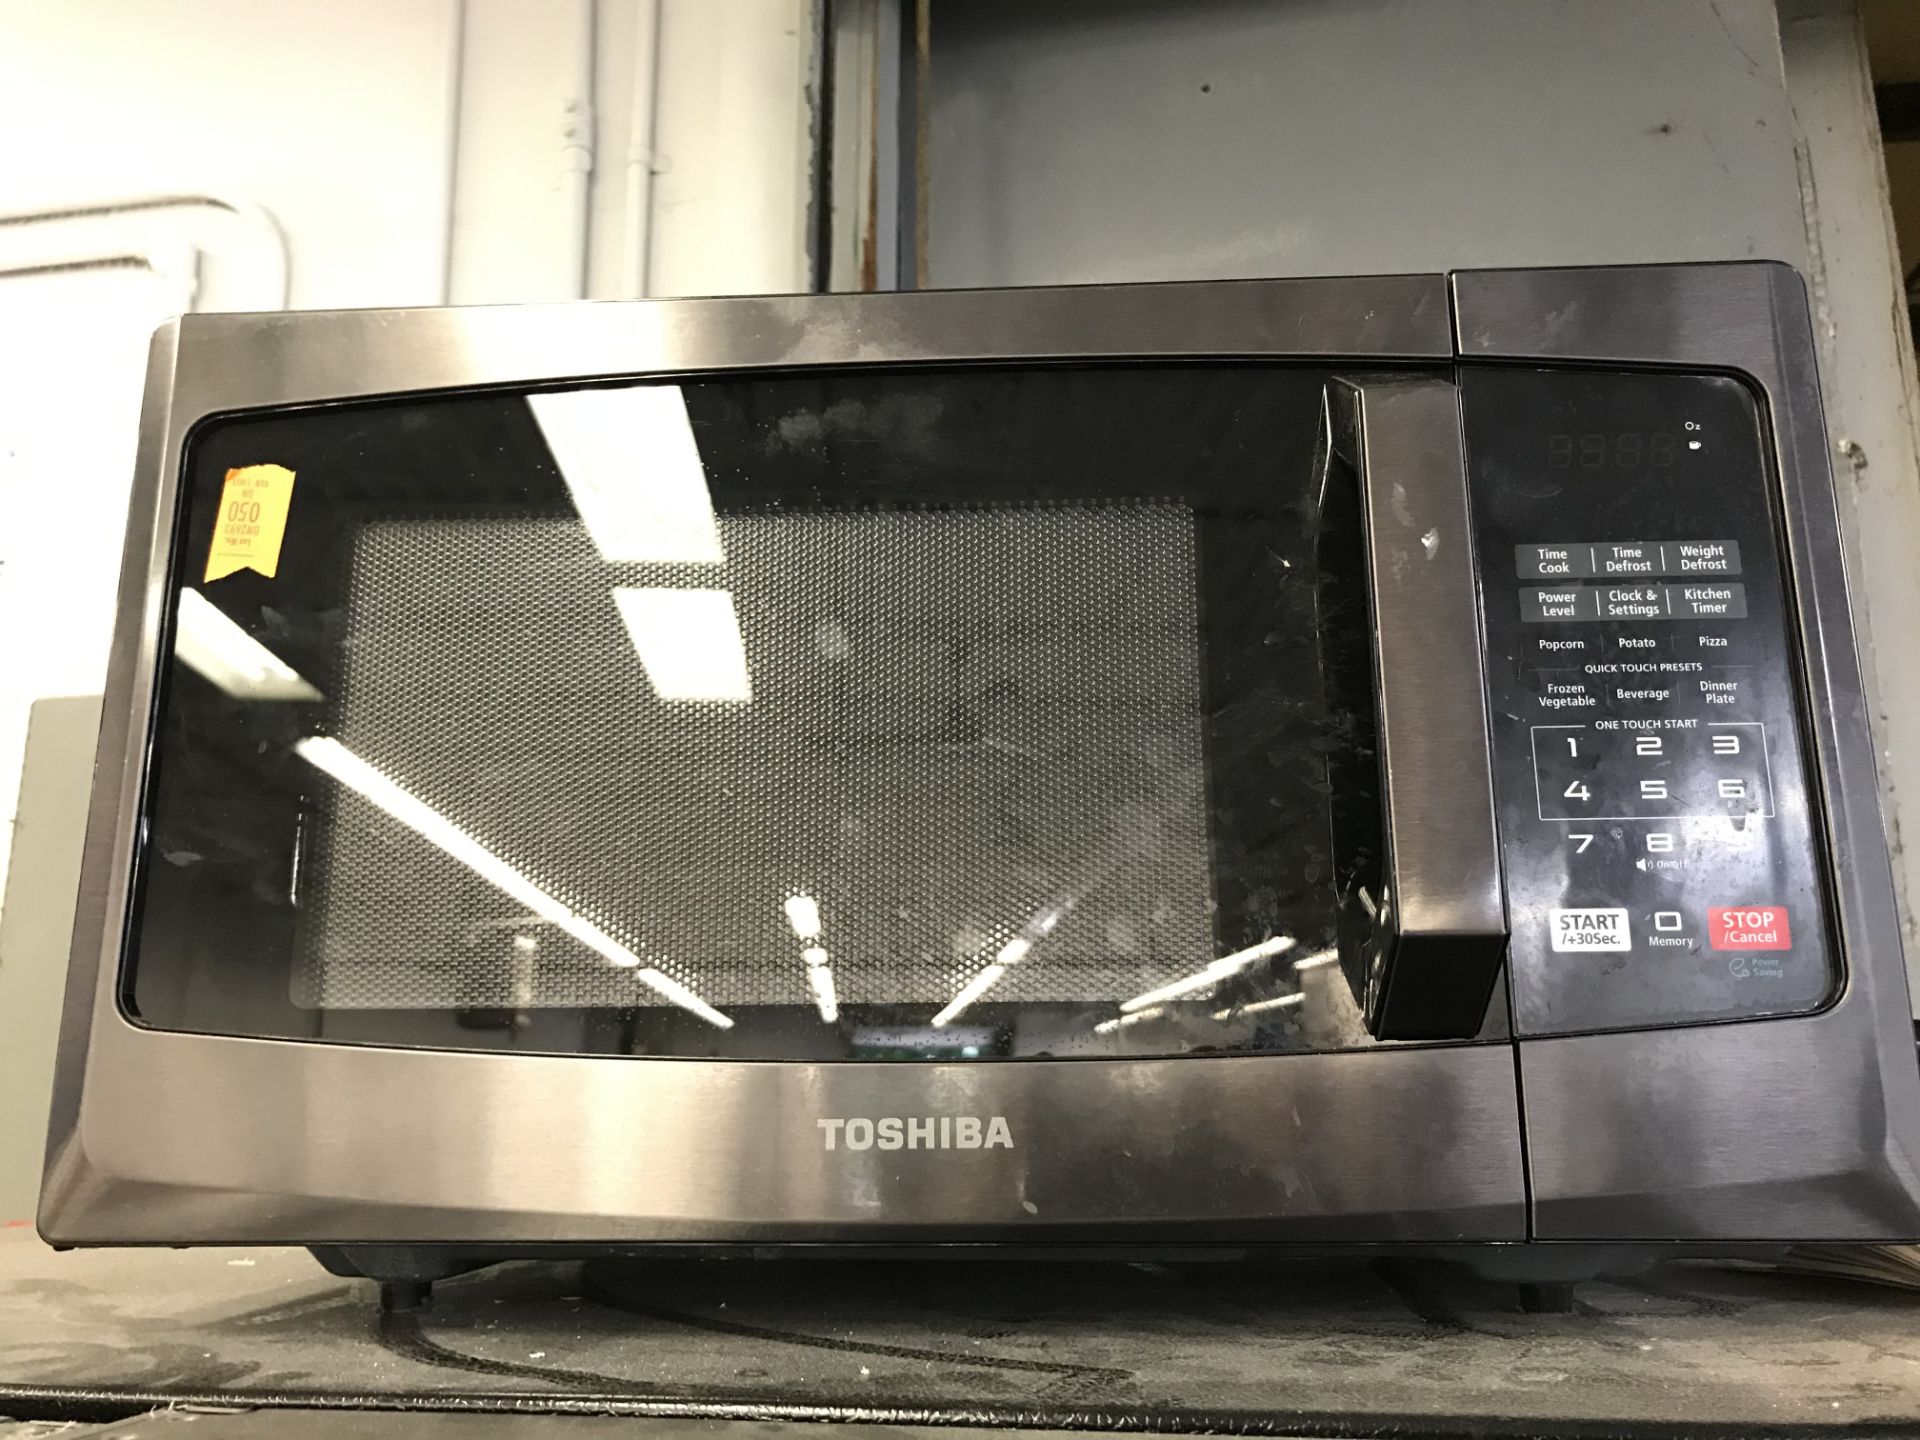 [LOT] Whirlpool Fridge W10179980A Toshiba Microwave, Keurig, Toaster, Coffee Mugs etc.